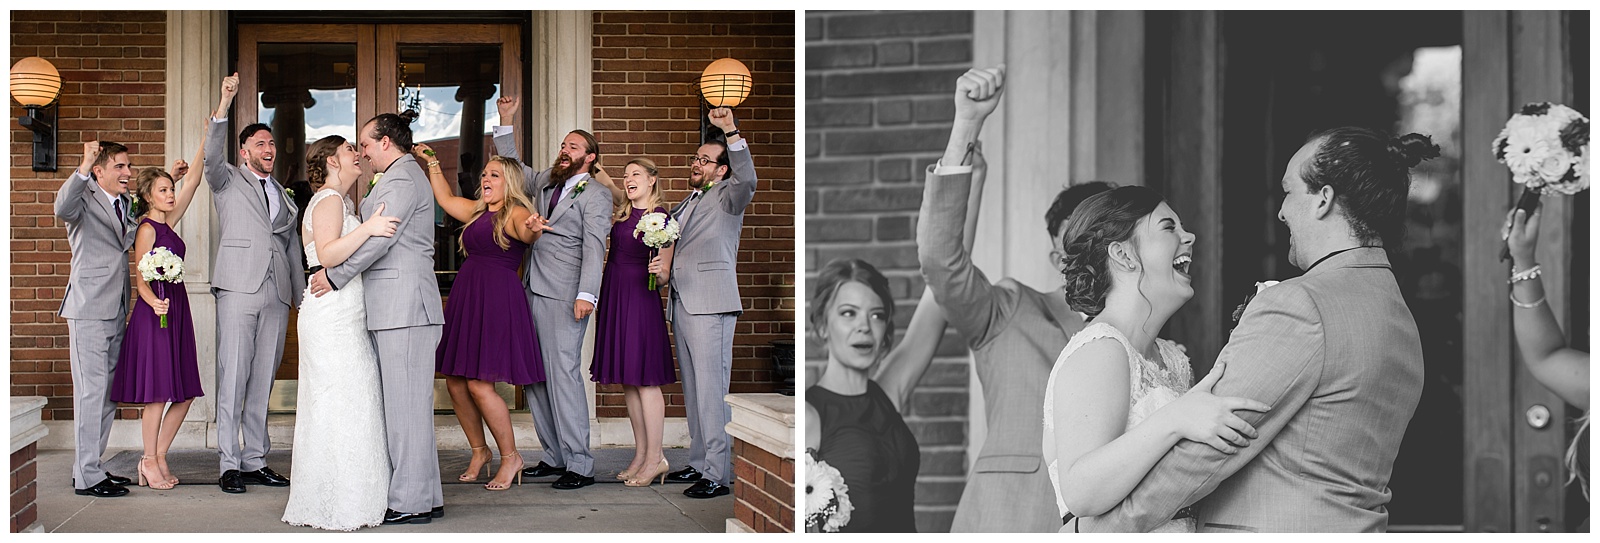 Wedding photography at Loose Mansion by Kansas City wedding photographers Wisdom-Watson Weddings.